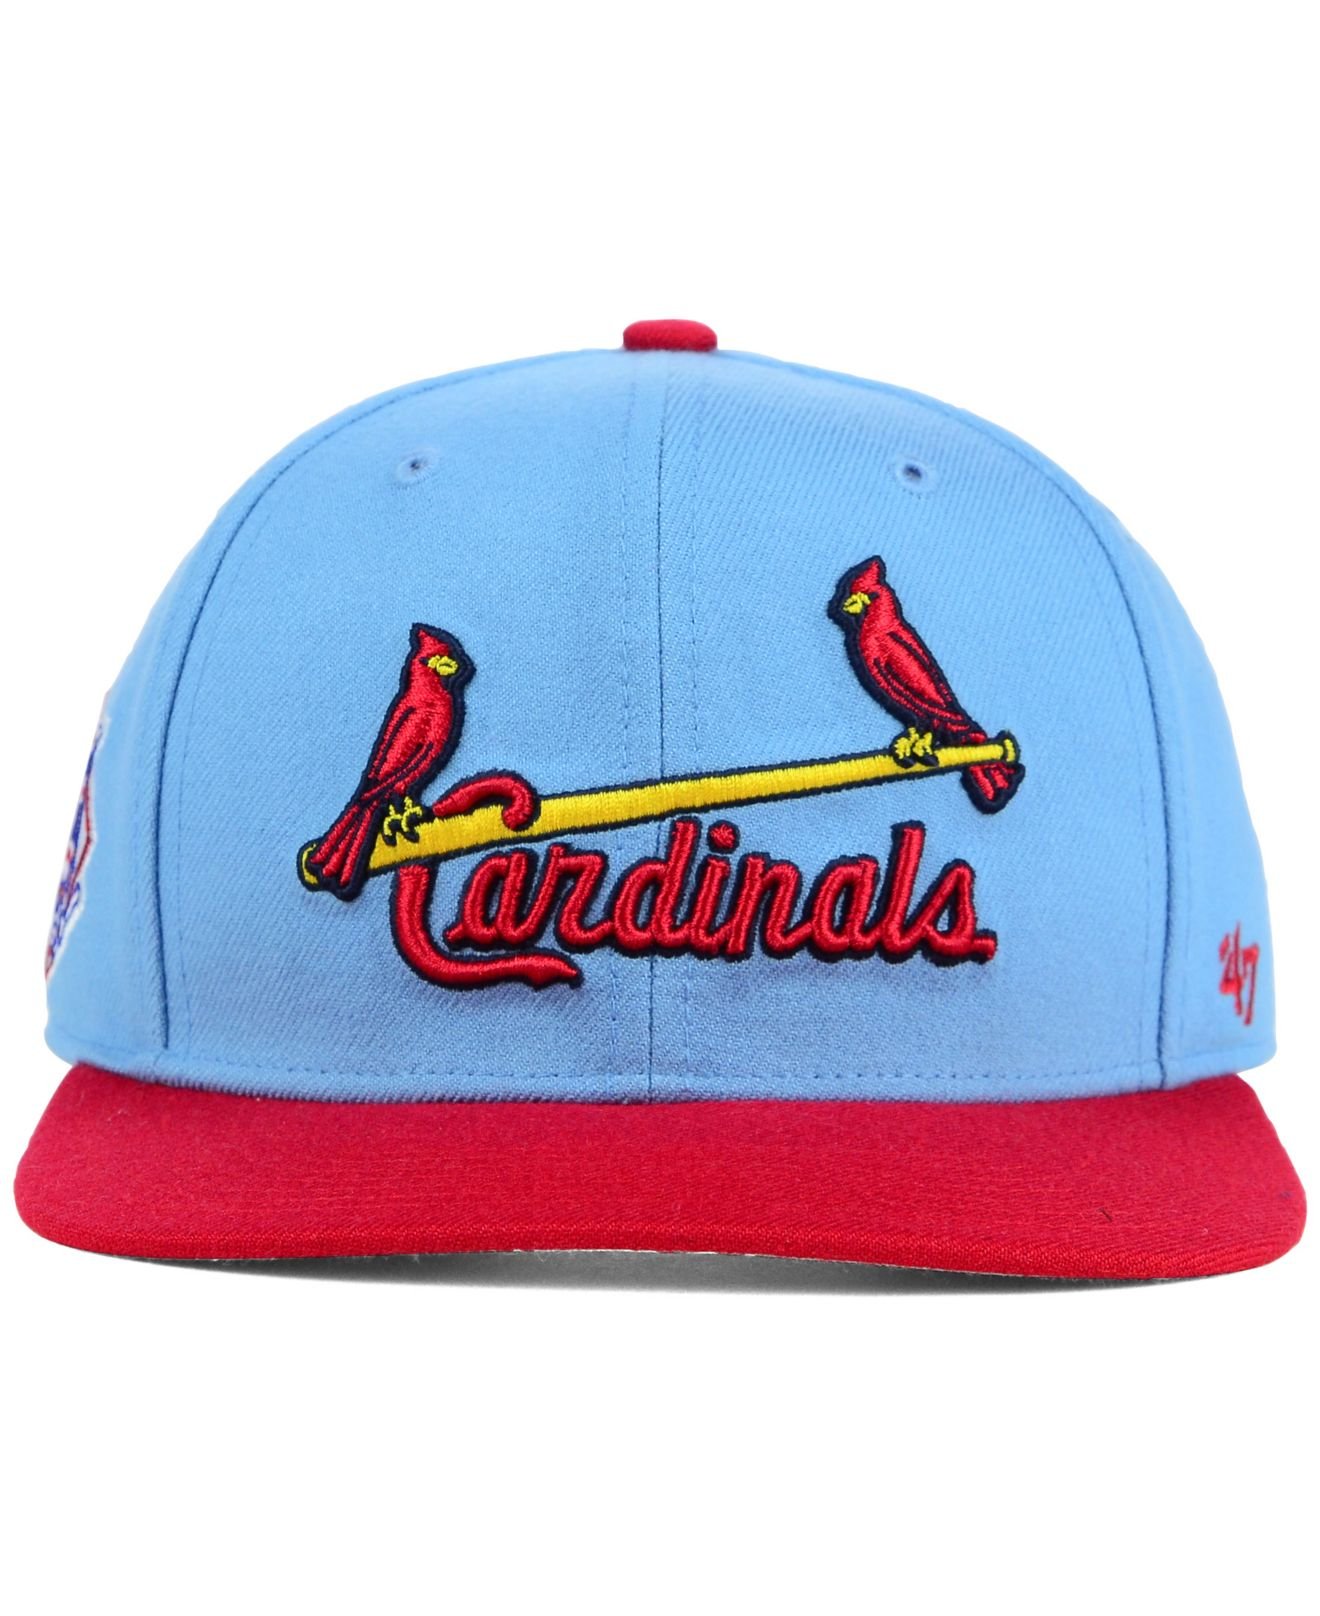 cardinals baby blue hat